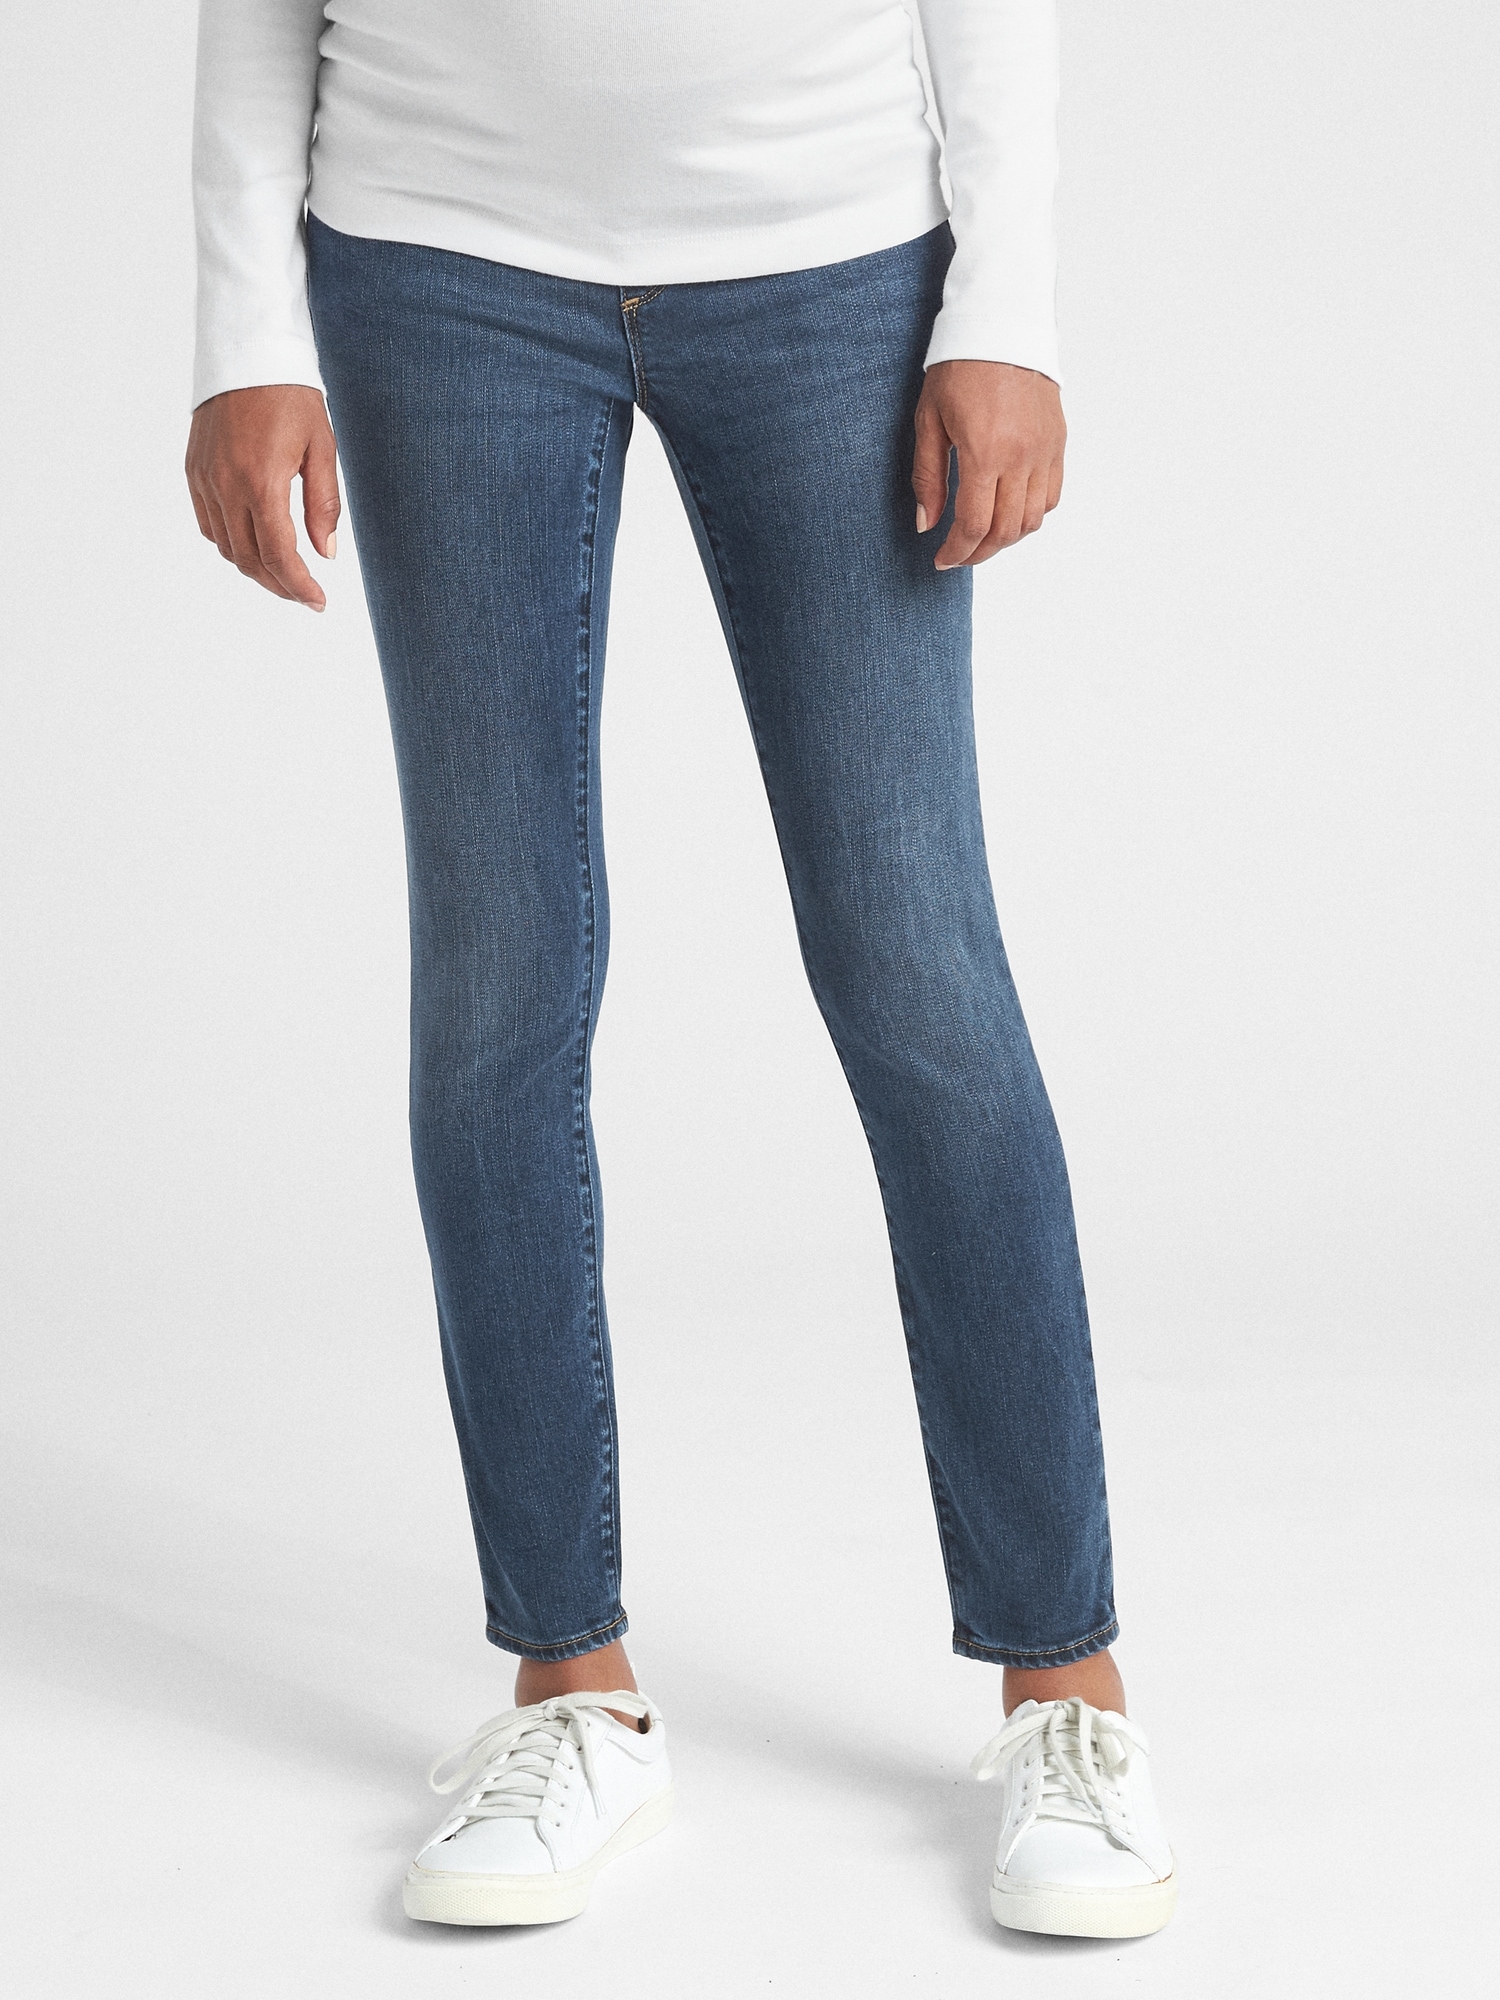 J Brand Side-Panel Skinny Maternity Jeans - Macy's